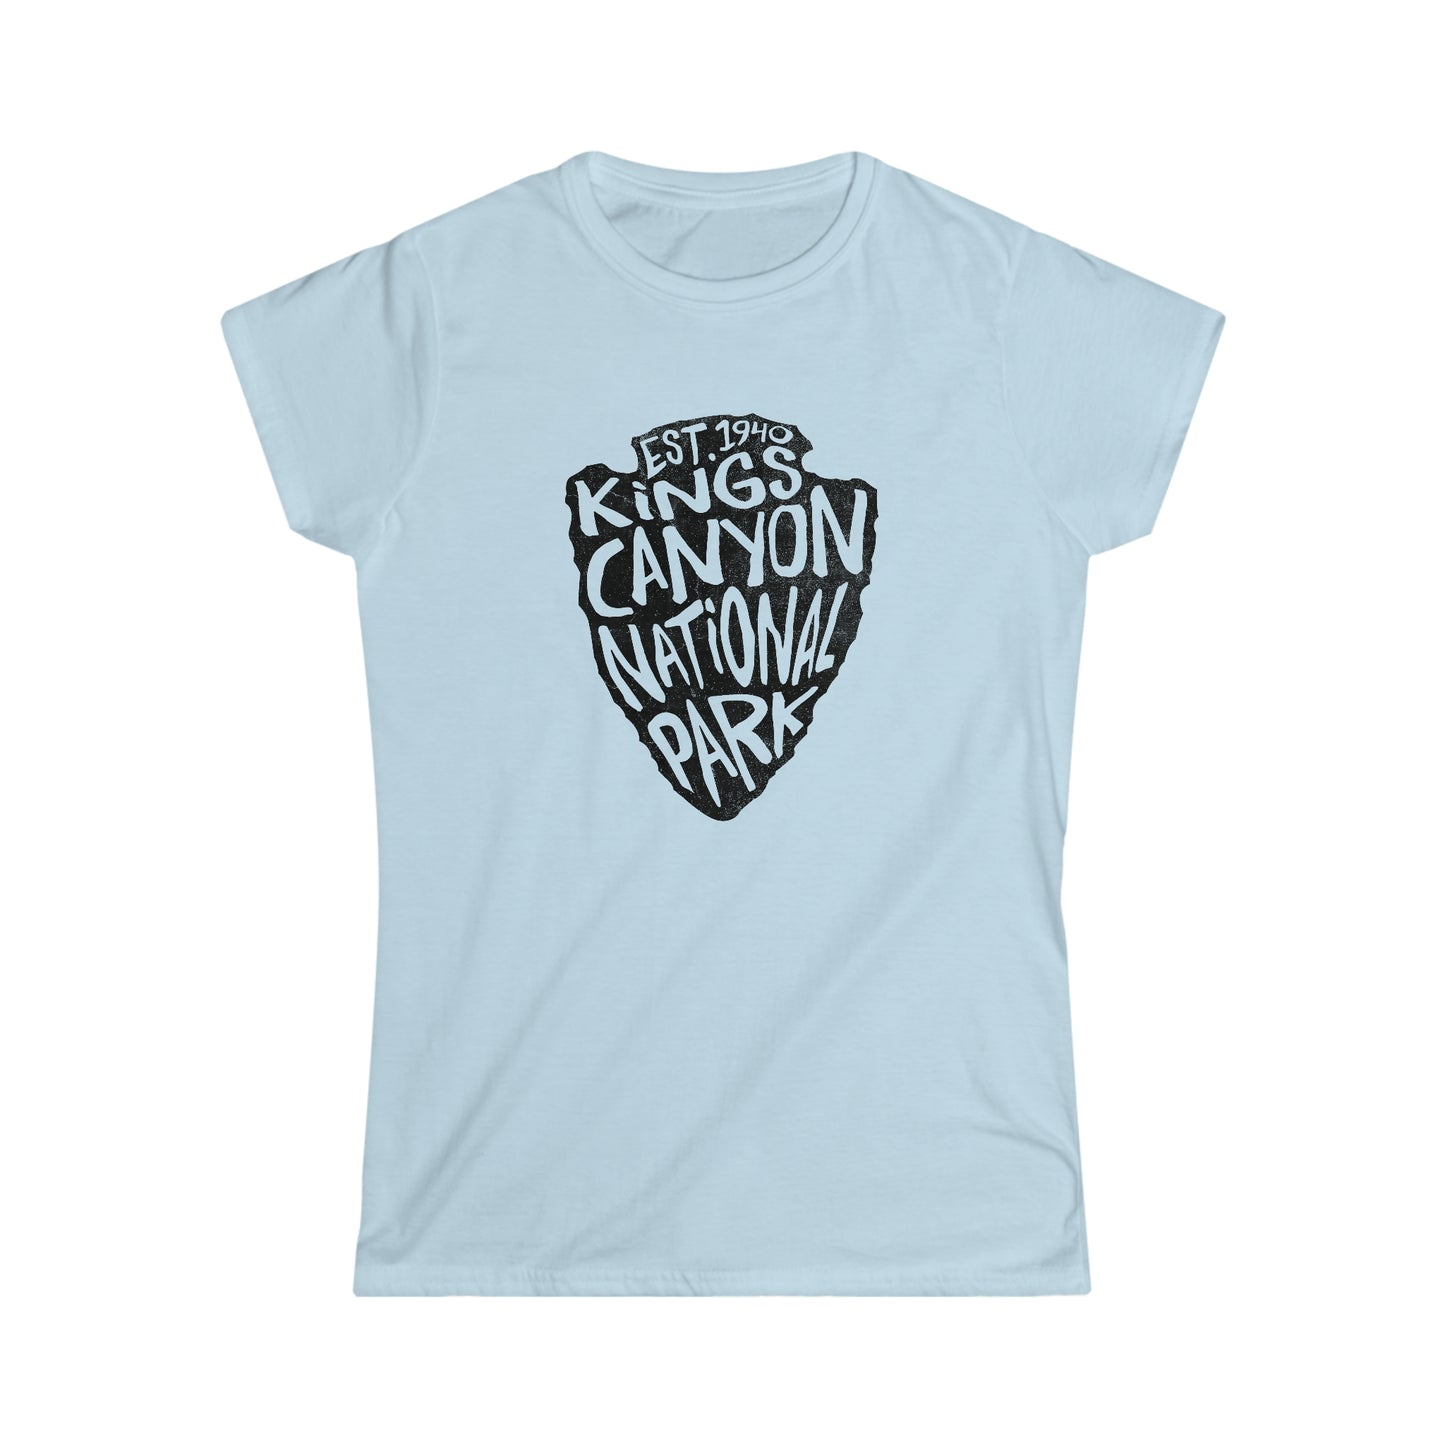 Kings Canyon National Park Women's T-Shirt - Arrowhead Design